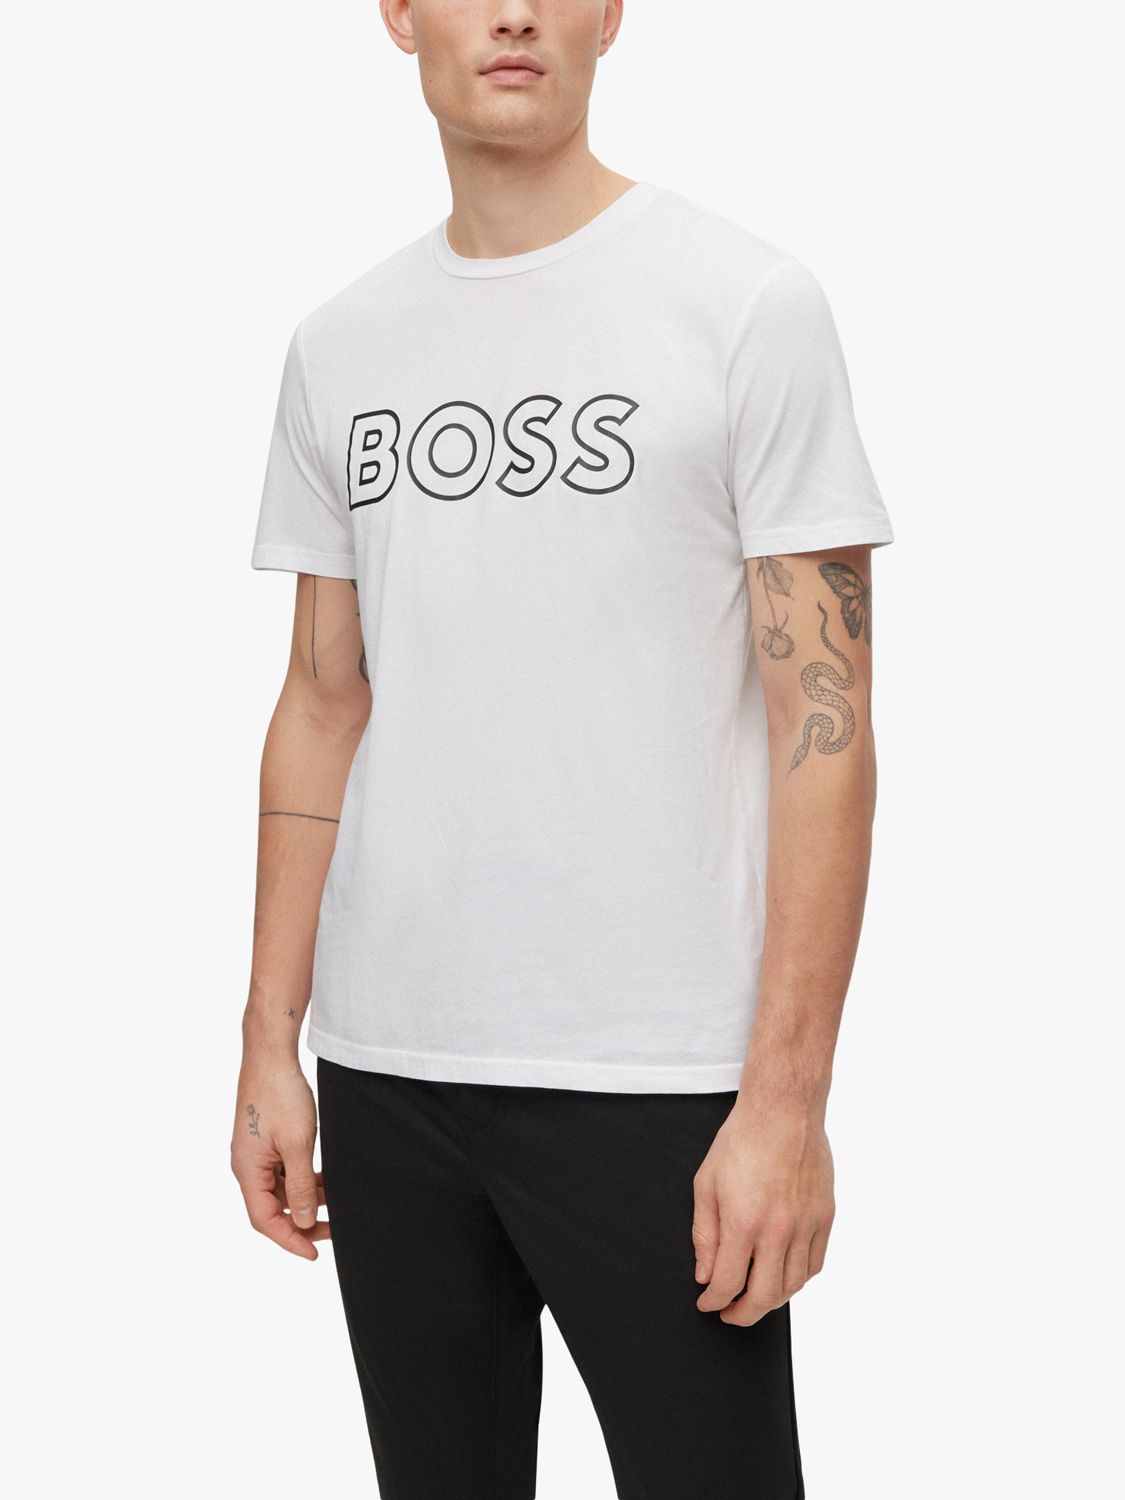 BOSS Teebox 5 Logo T-Shirt, Pack of 2, Black/White at John Lewis & Partners